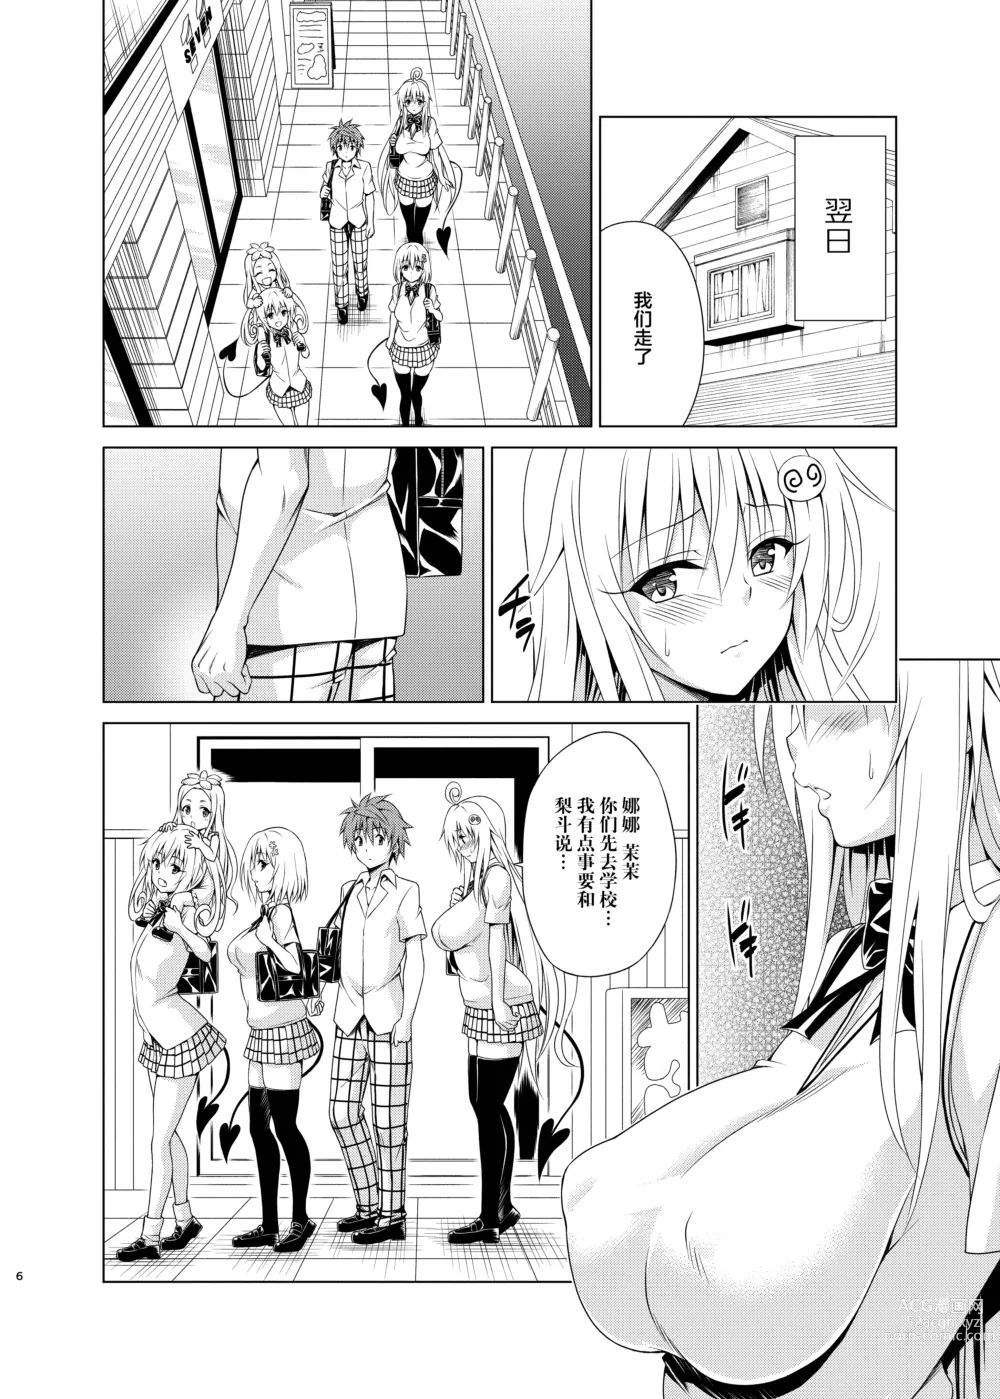 Page 6 of doujinshi Mezase! Rakuen Keikaku RX Vol. 2